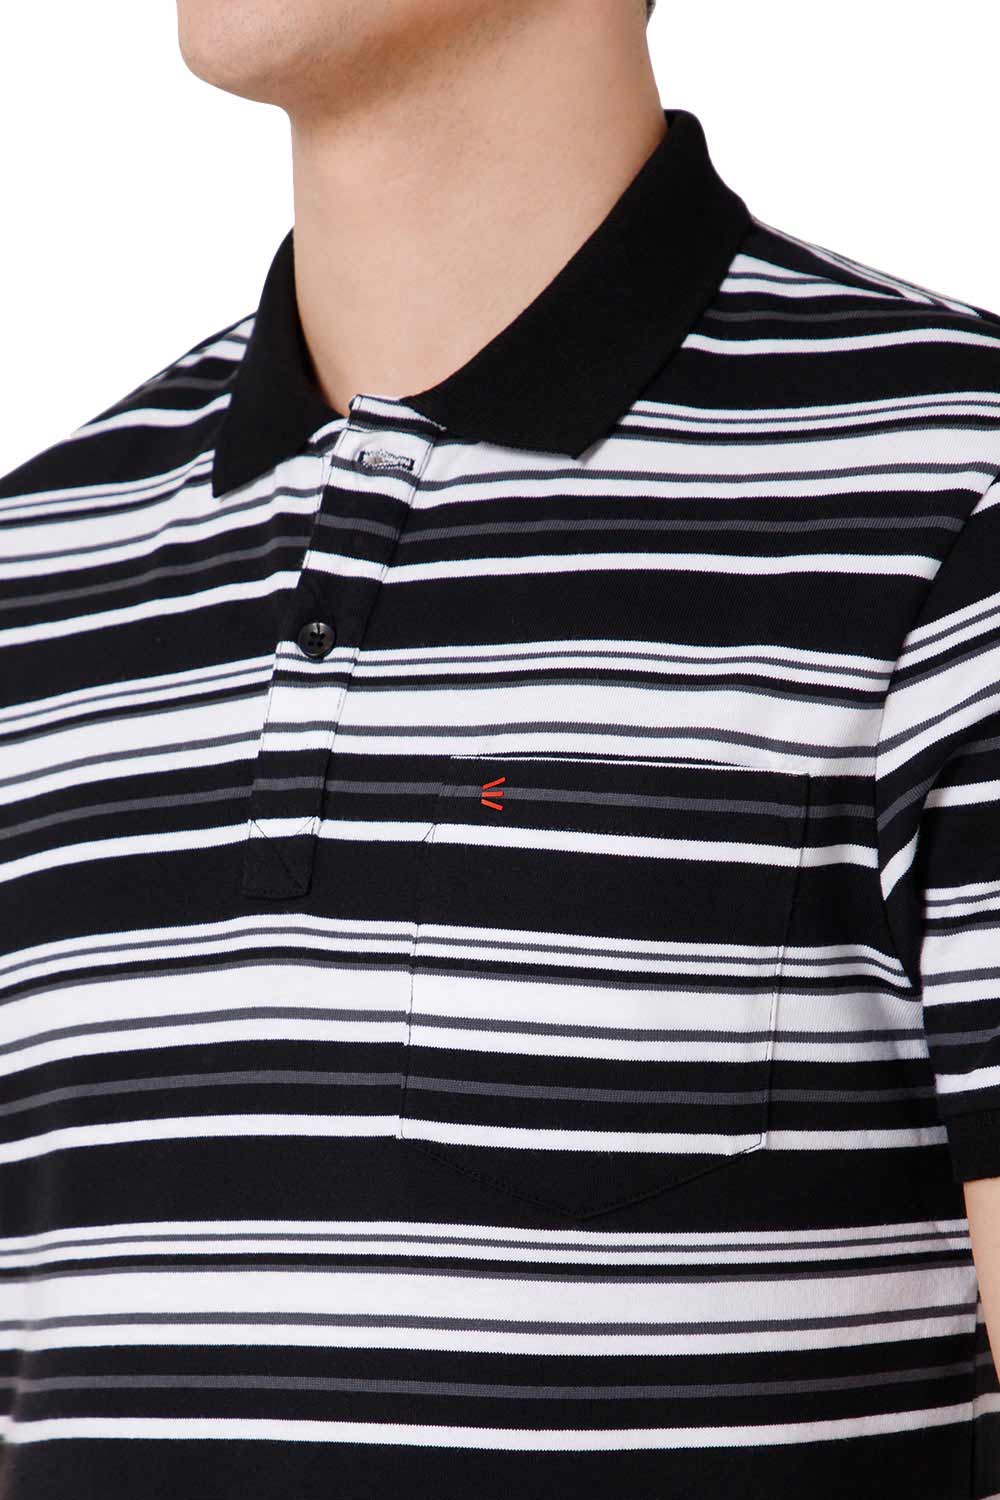 Enhance T-Shirts Men's Polo - Black - TS46